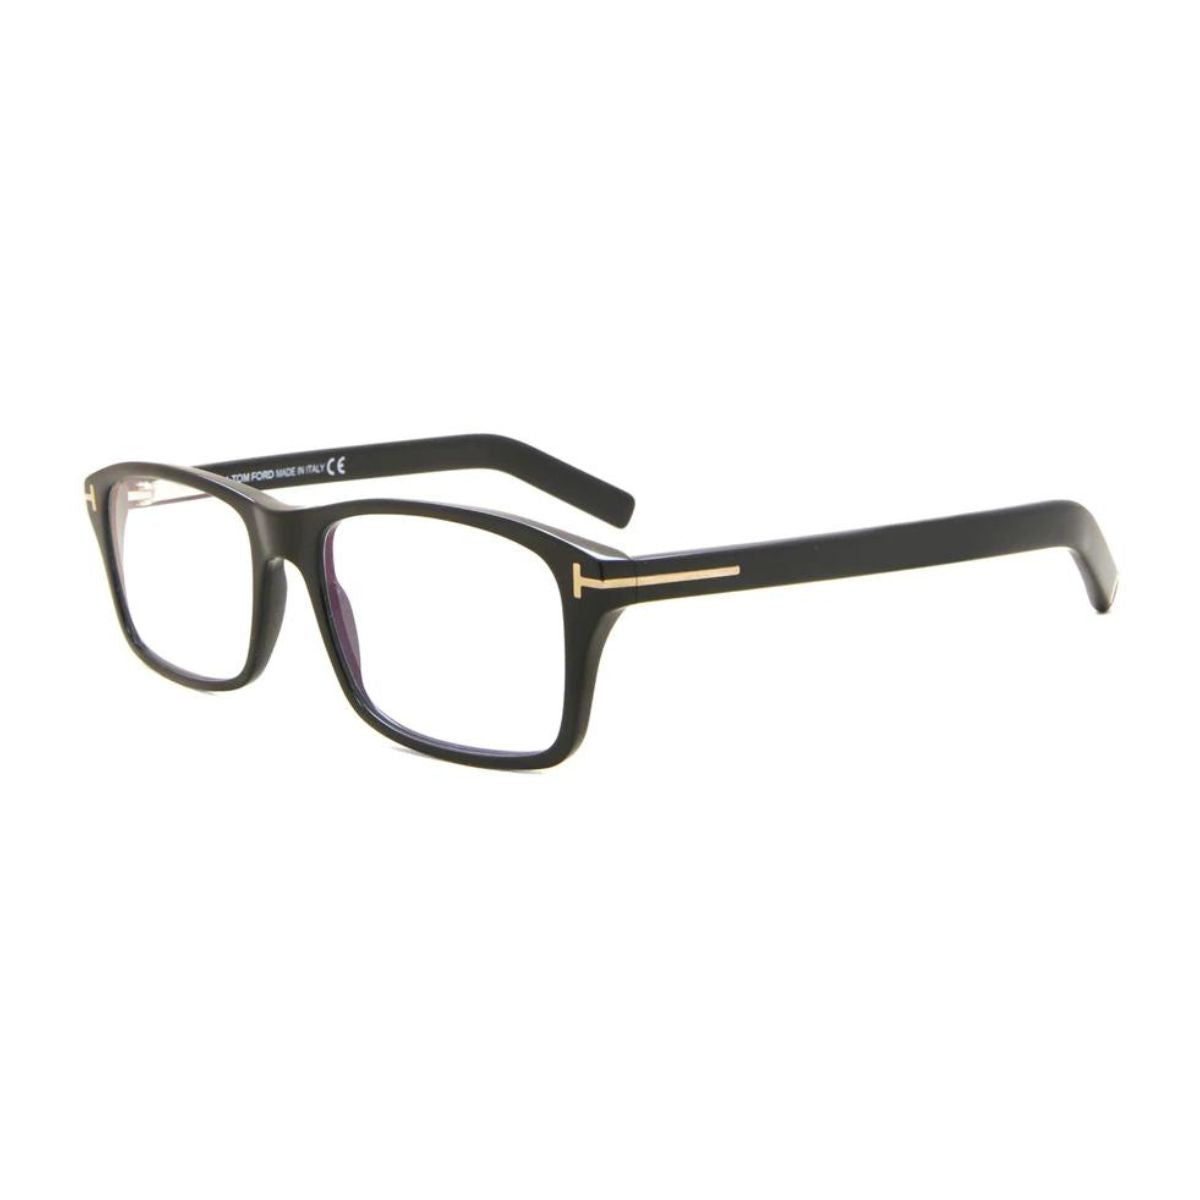 "Tom Ford 5663-B 001 stylish eyewear frame for men and women at optorium"